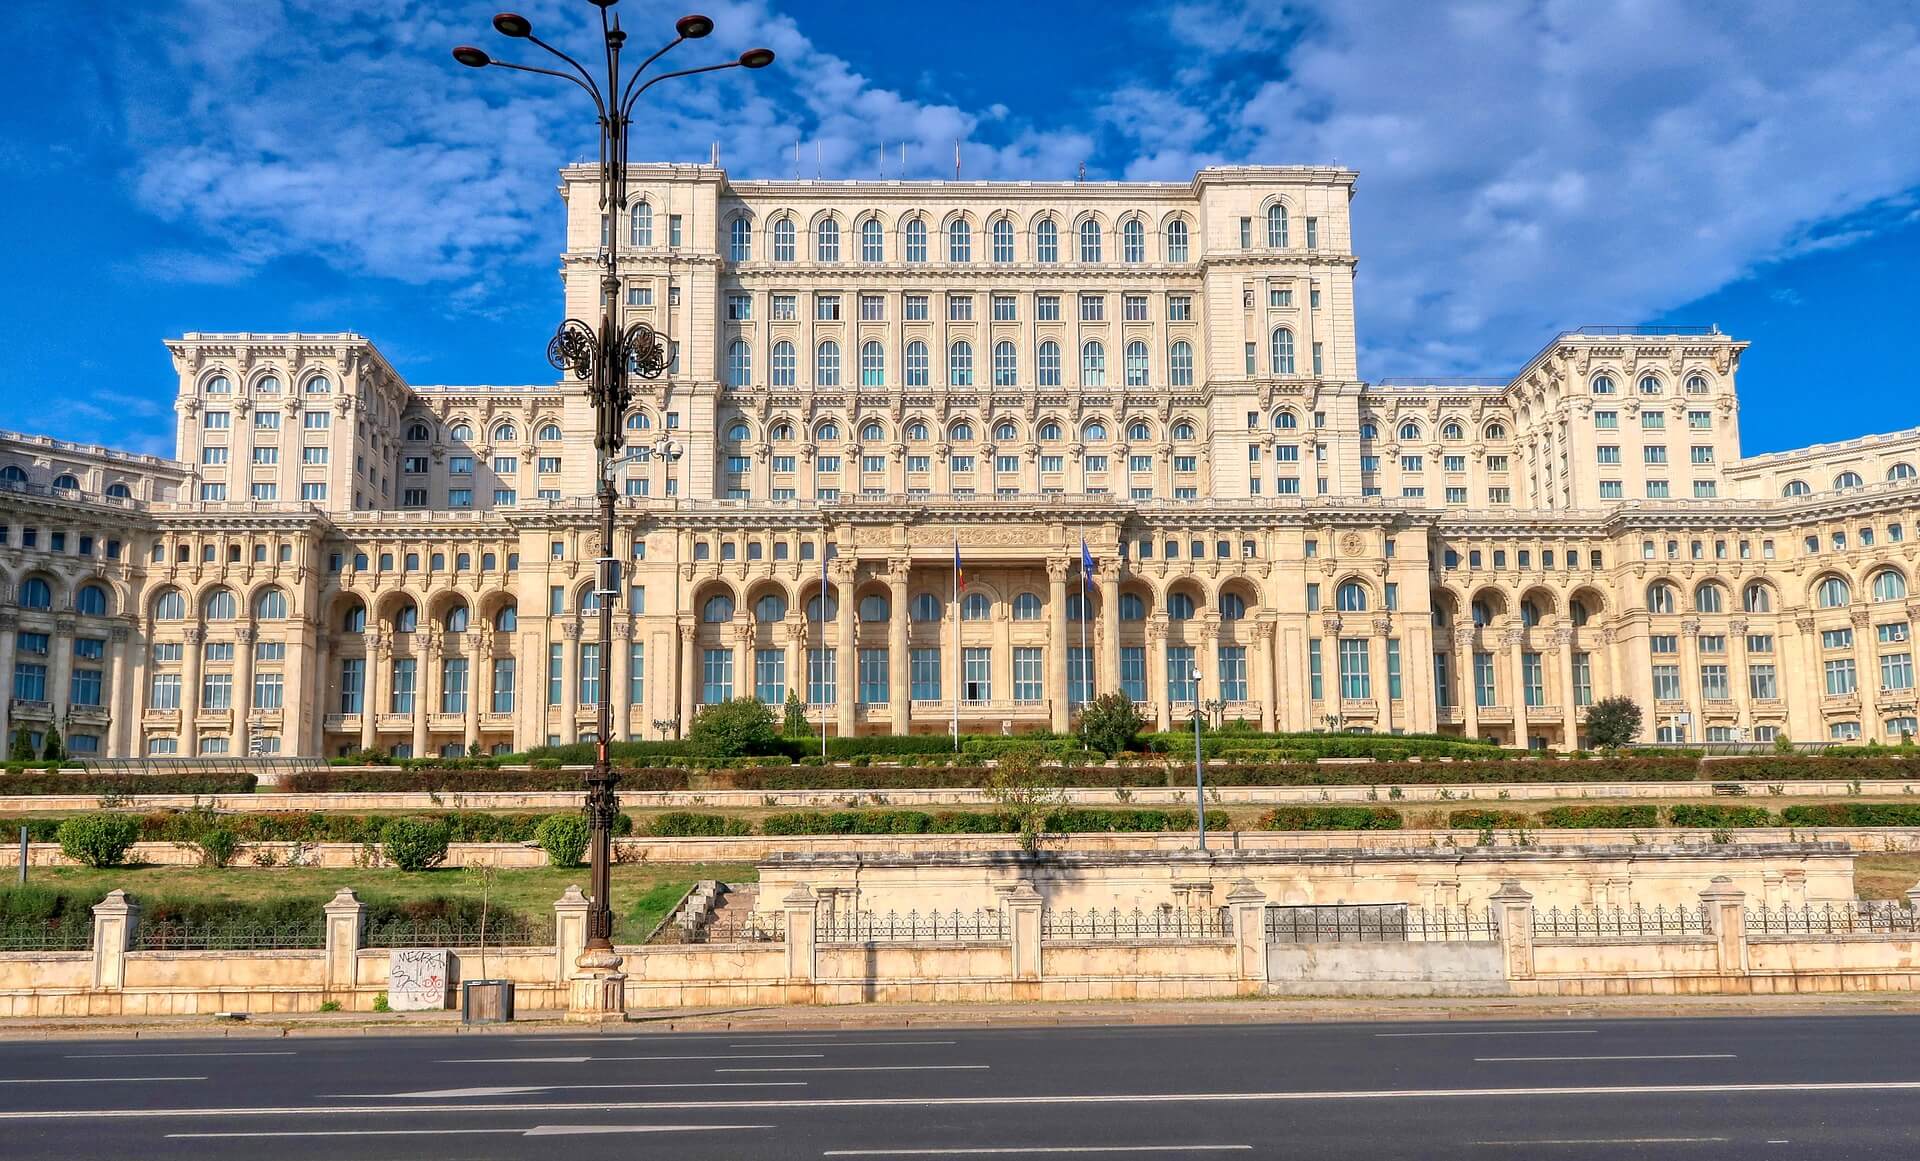 888poker LIVE Bucharest - Palace of Parliament